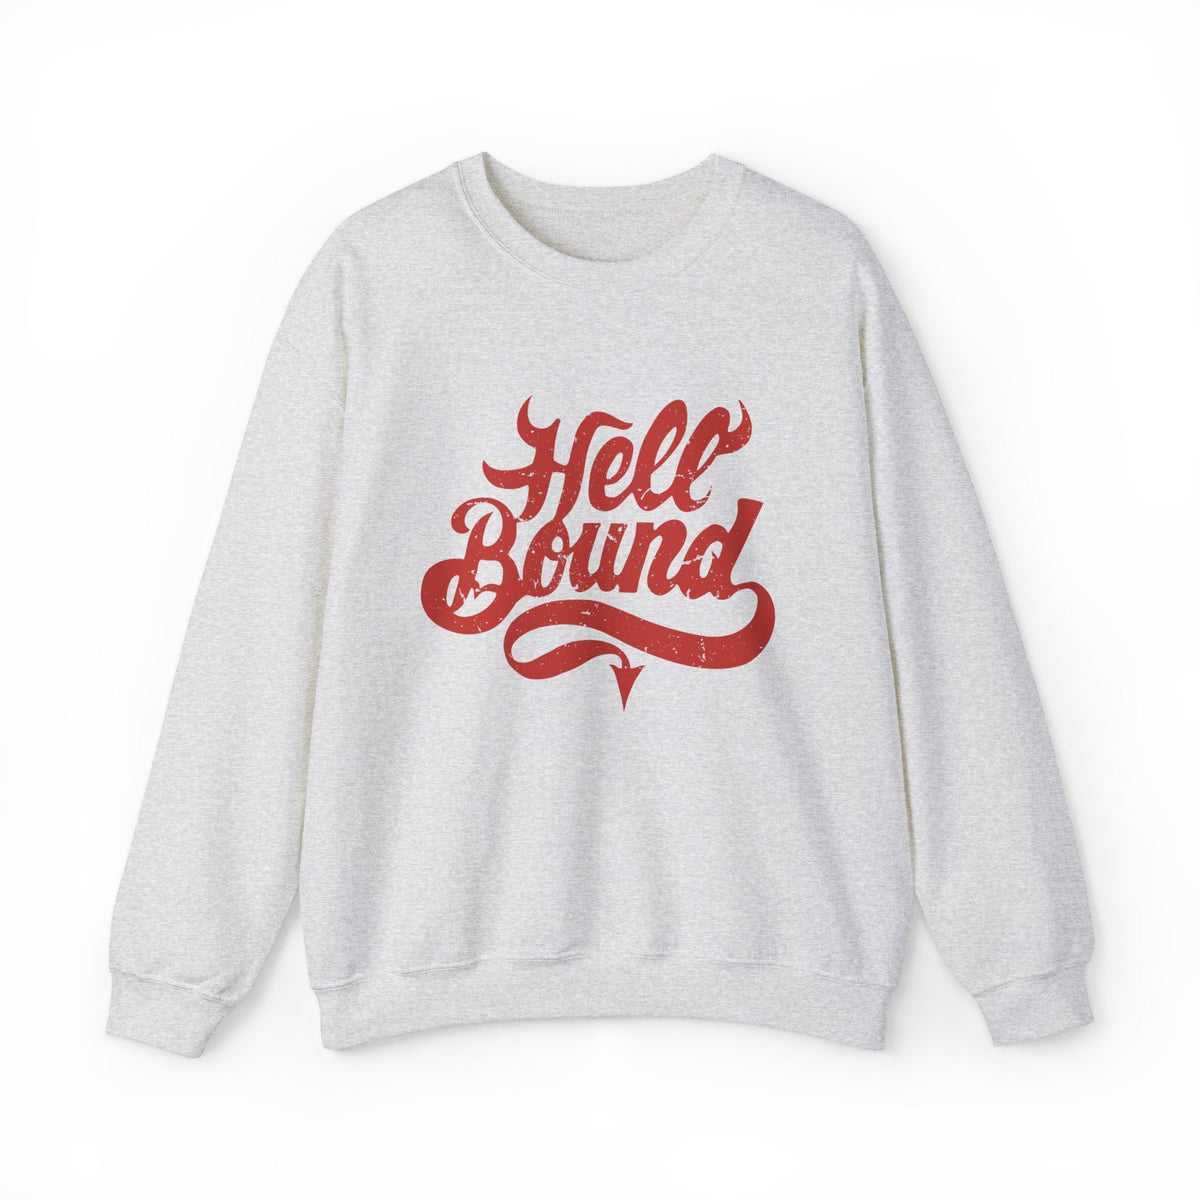 Hellbound Long Sleeve Crew Neck Sweatshirt - Goth Cloth Co.Sweatshirt27582243605455764660